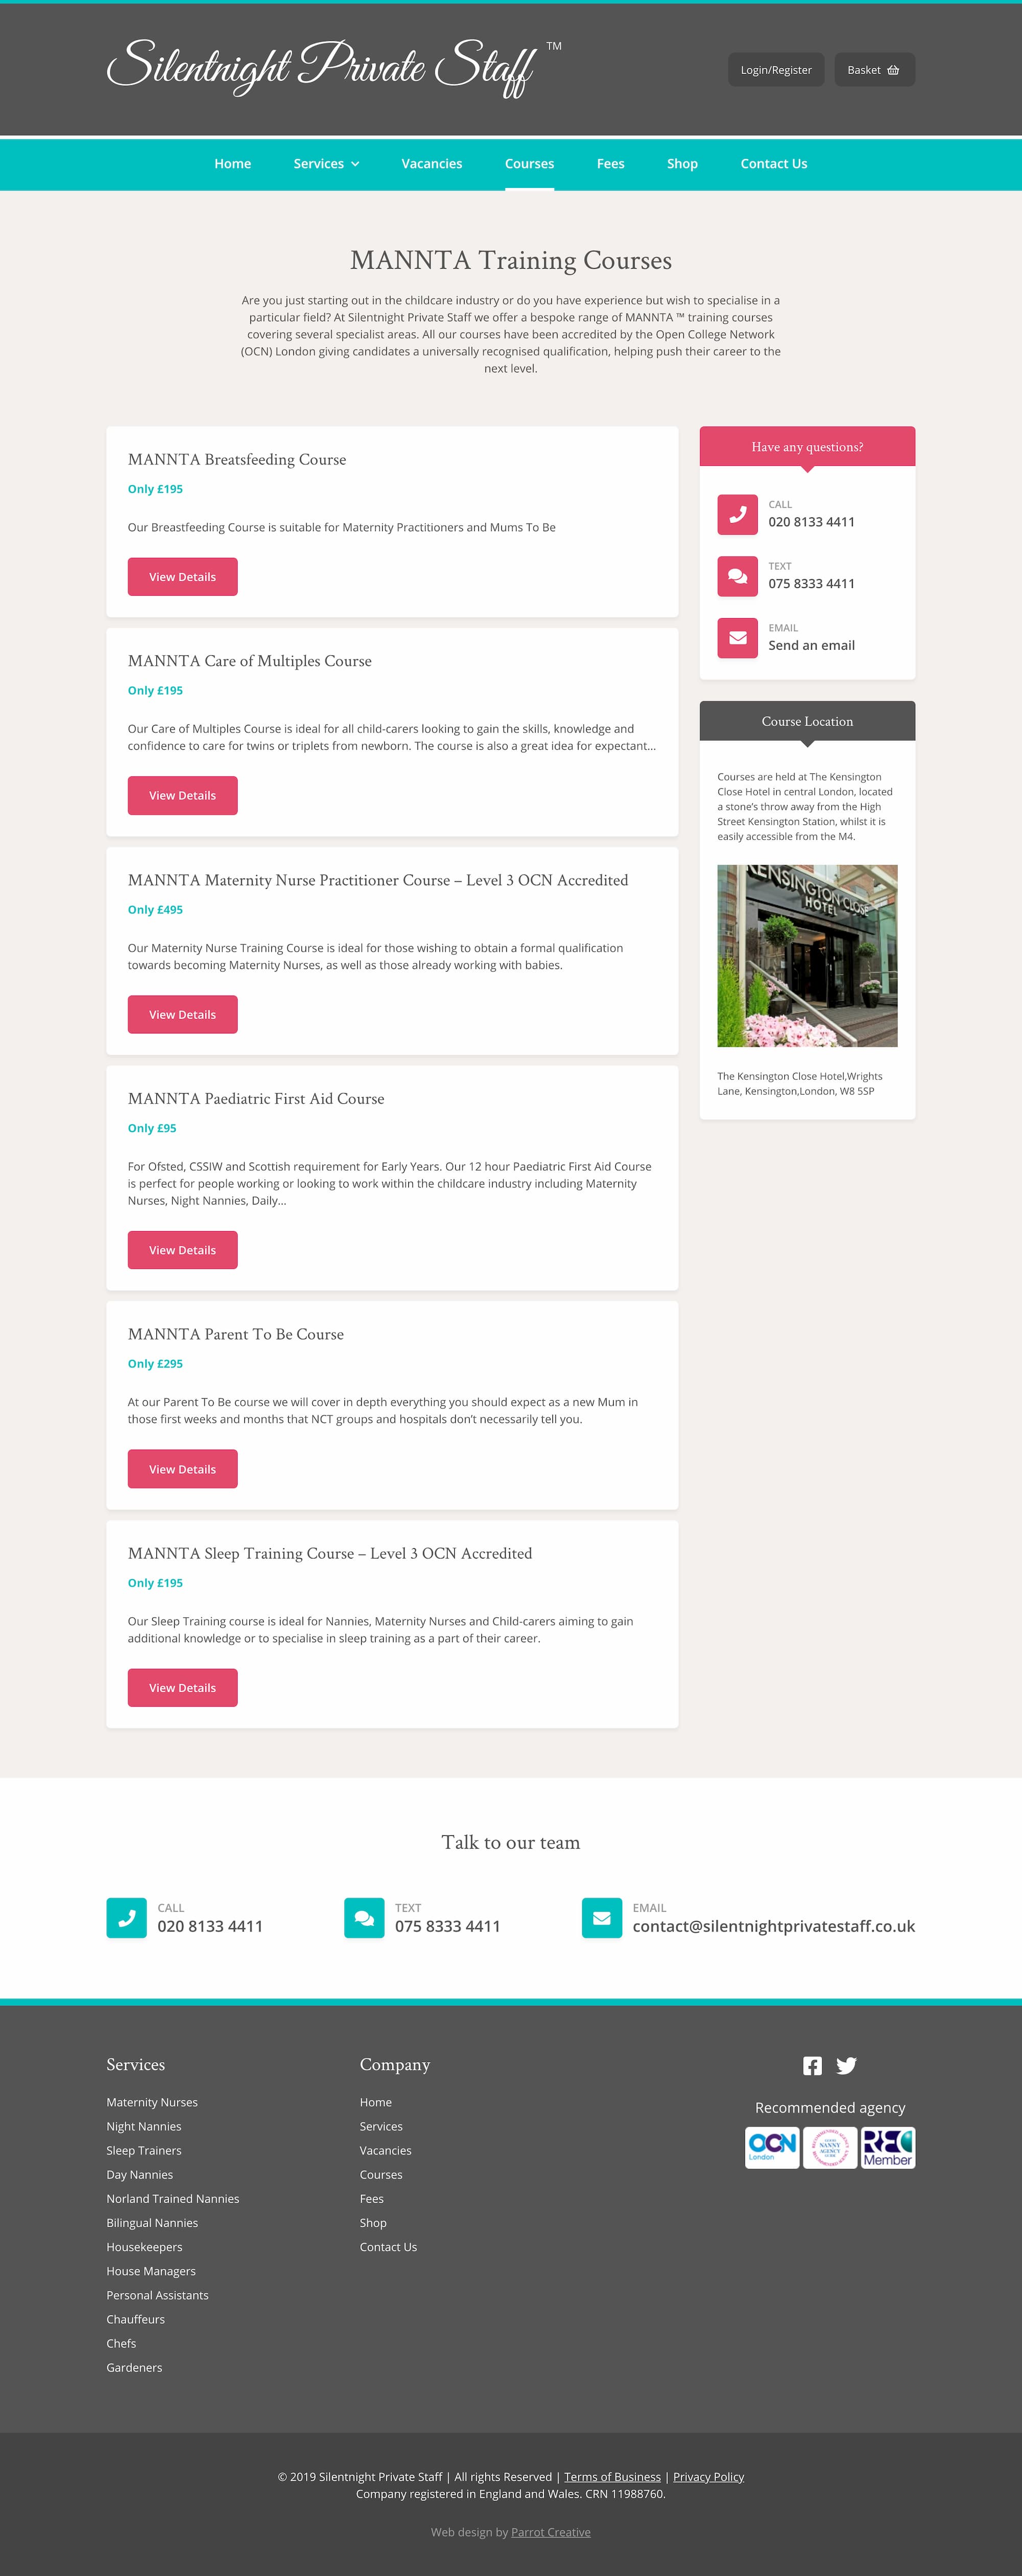 Private staff website course page design